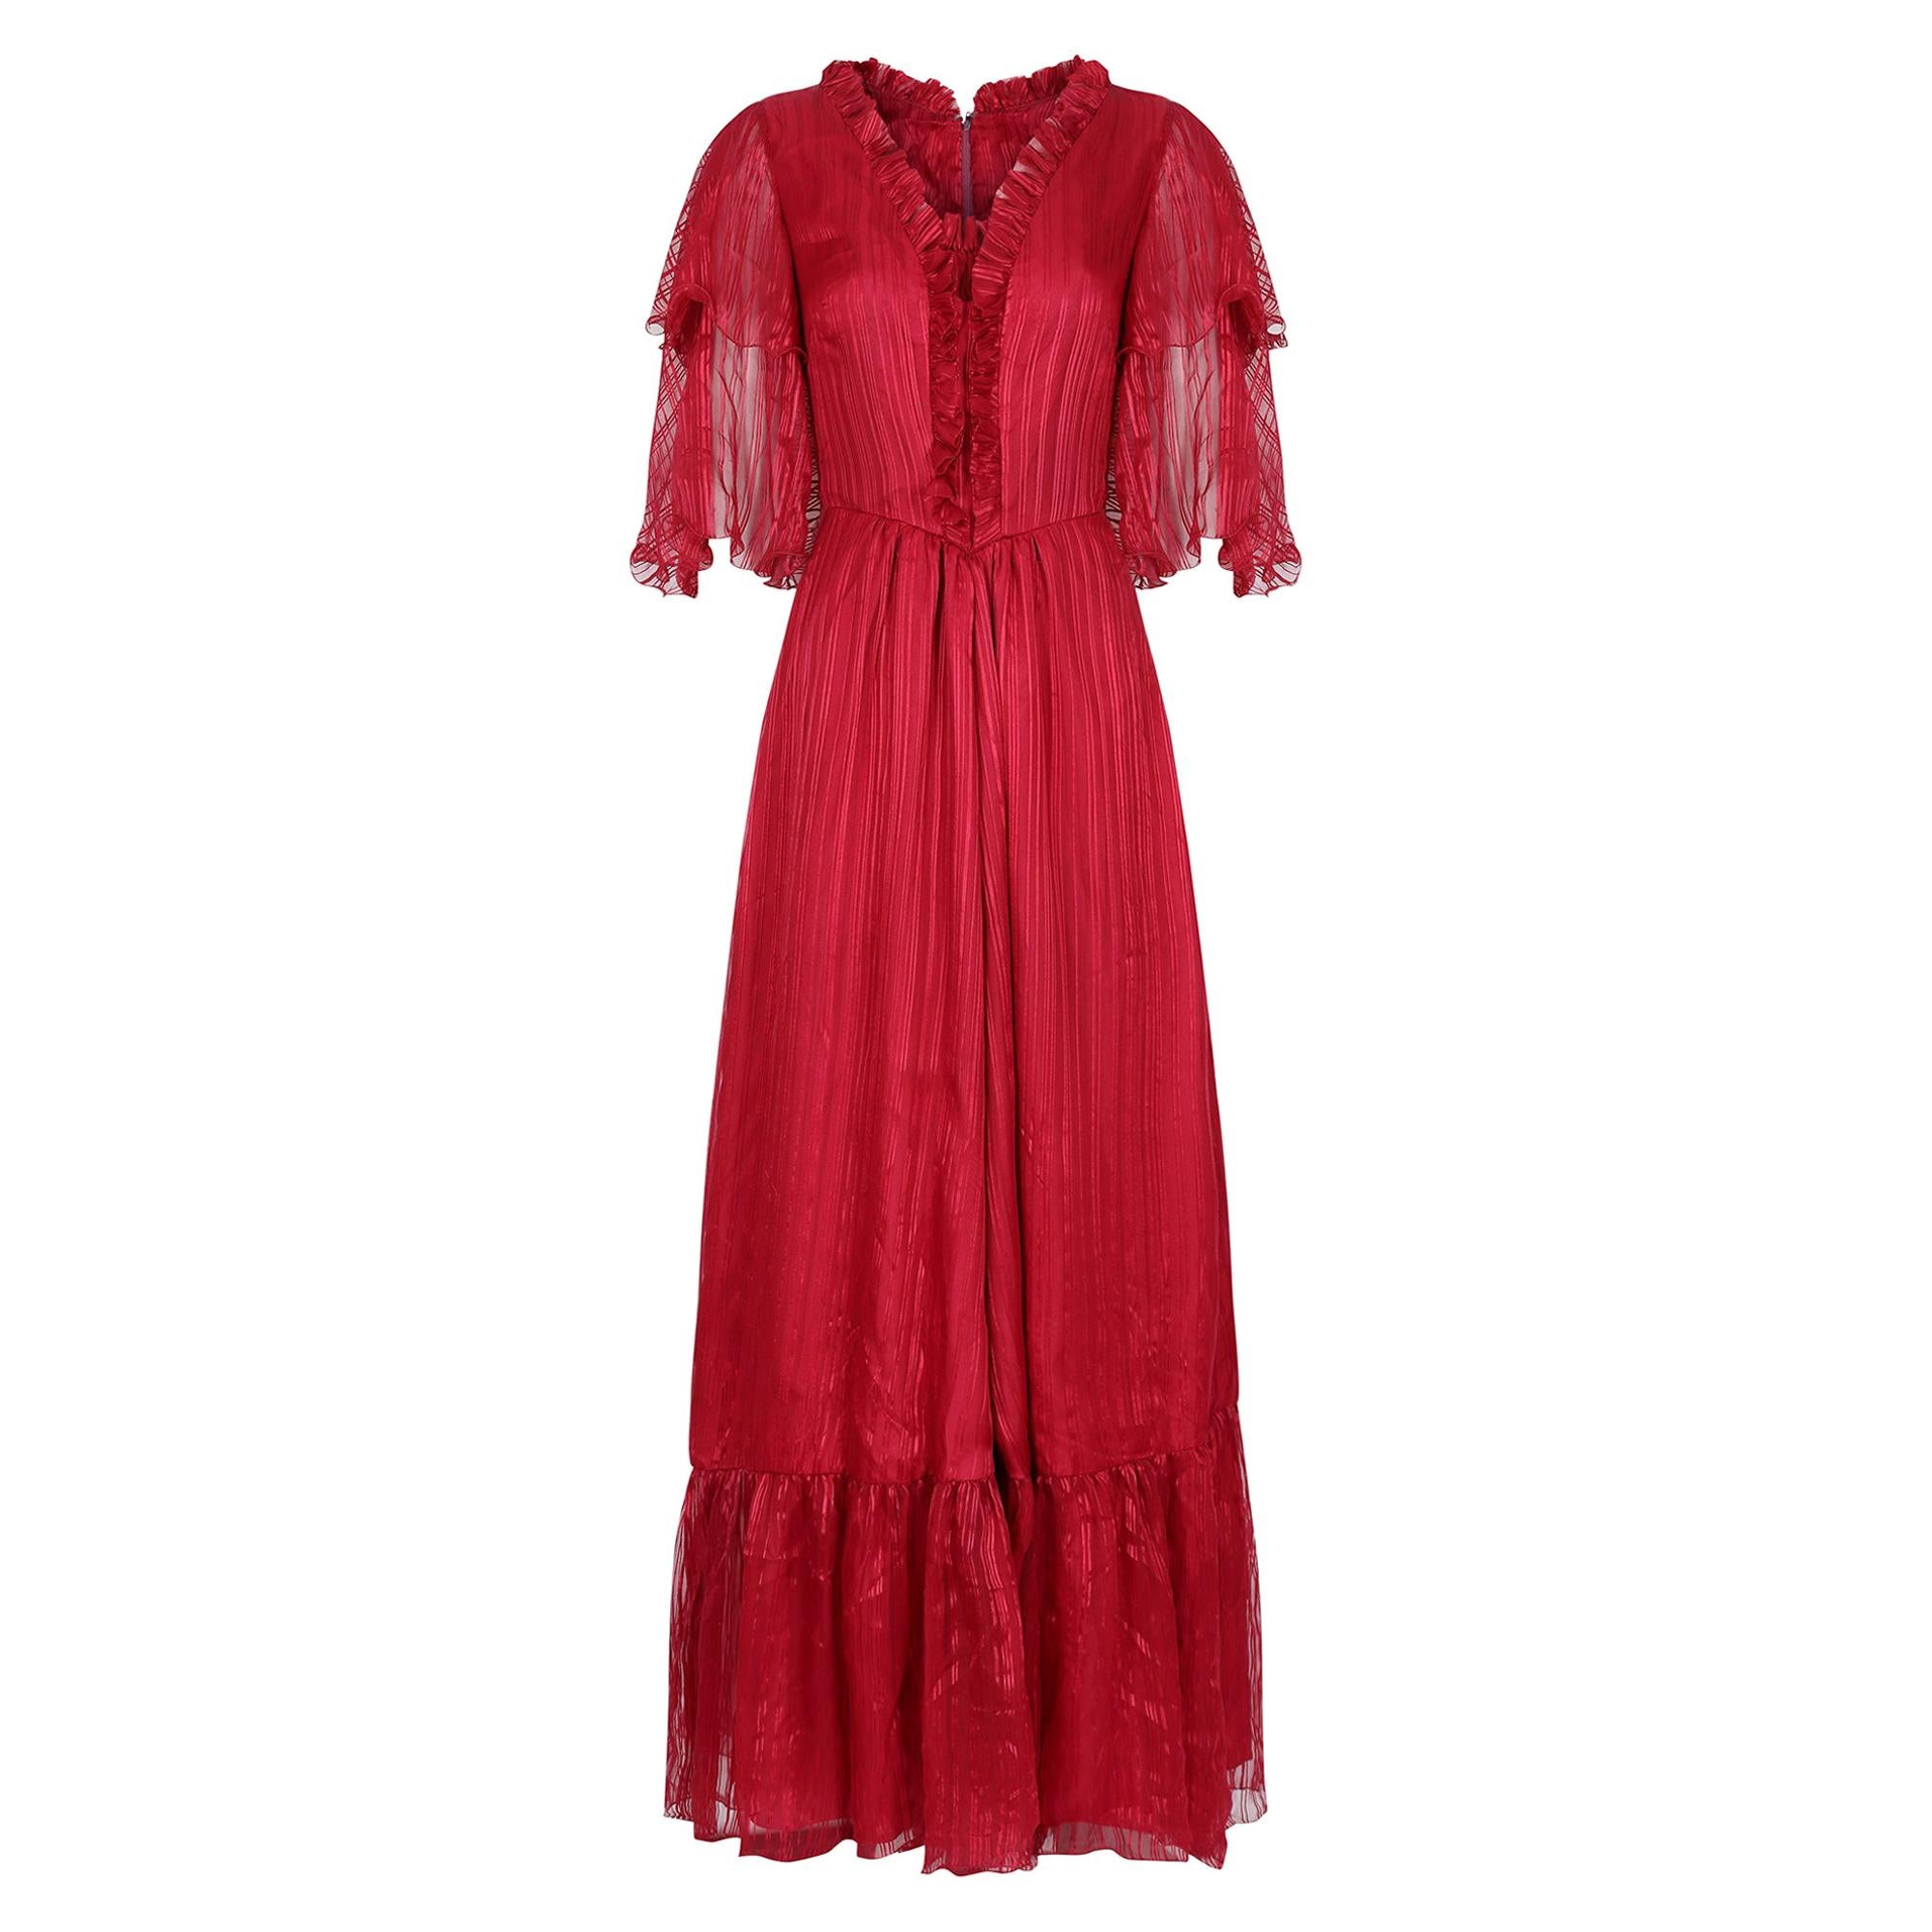 1970s Silk Chiffon Scarlet Red Victoriana Maxi Dress